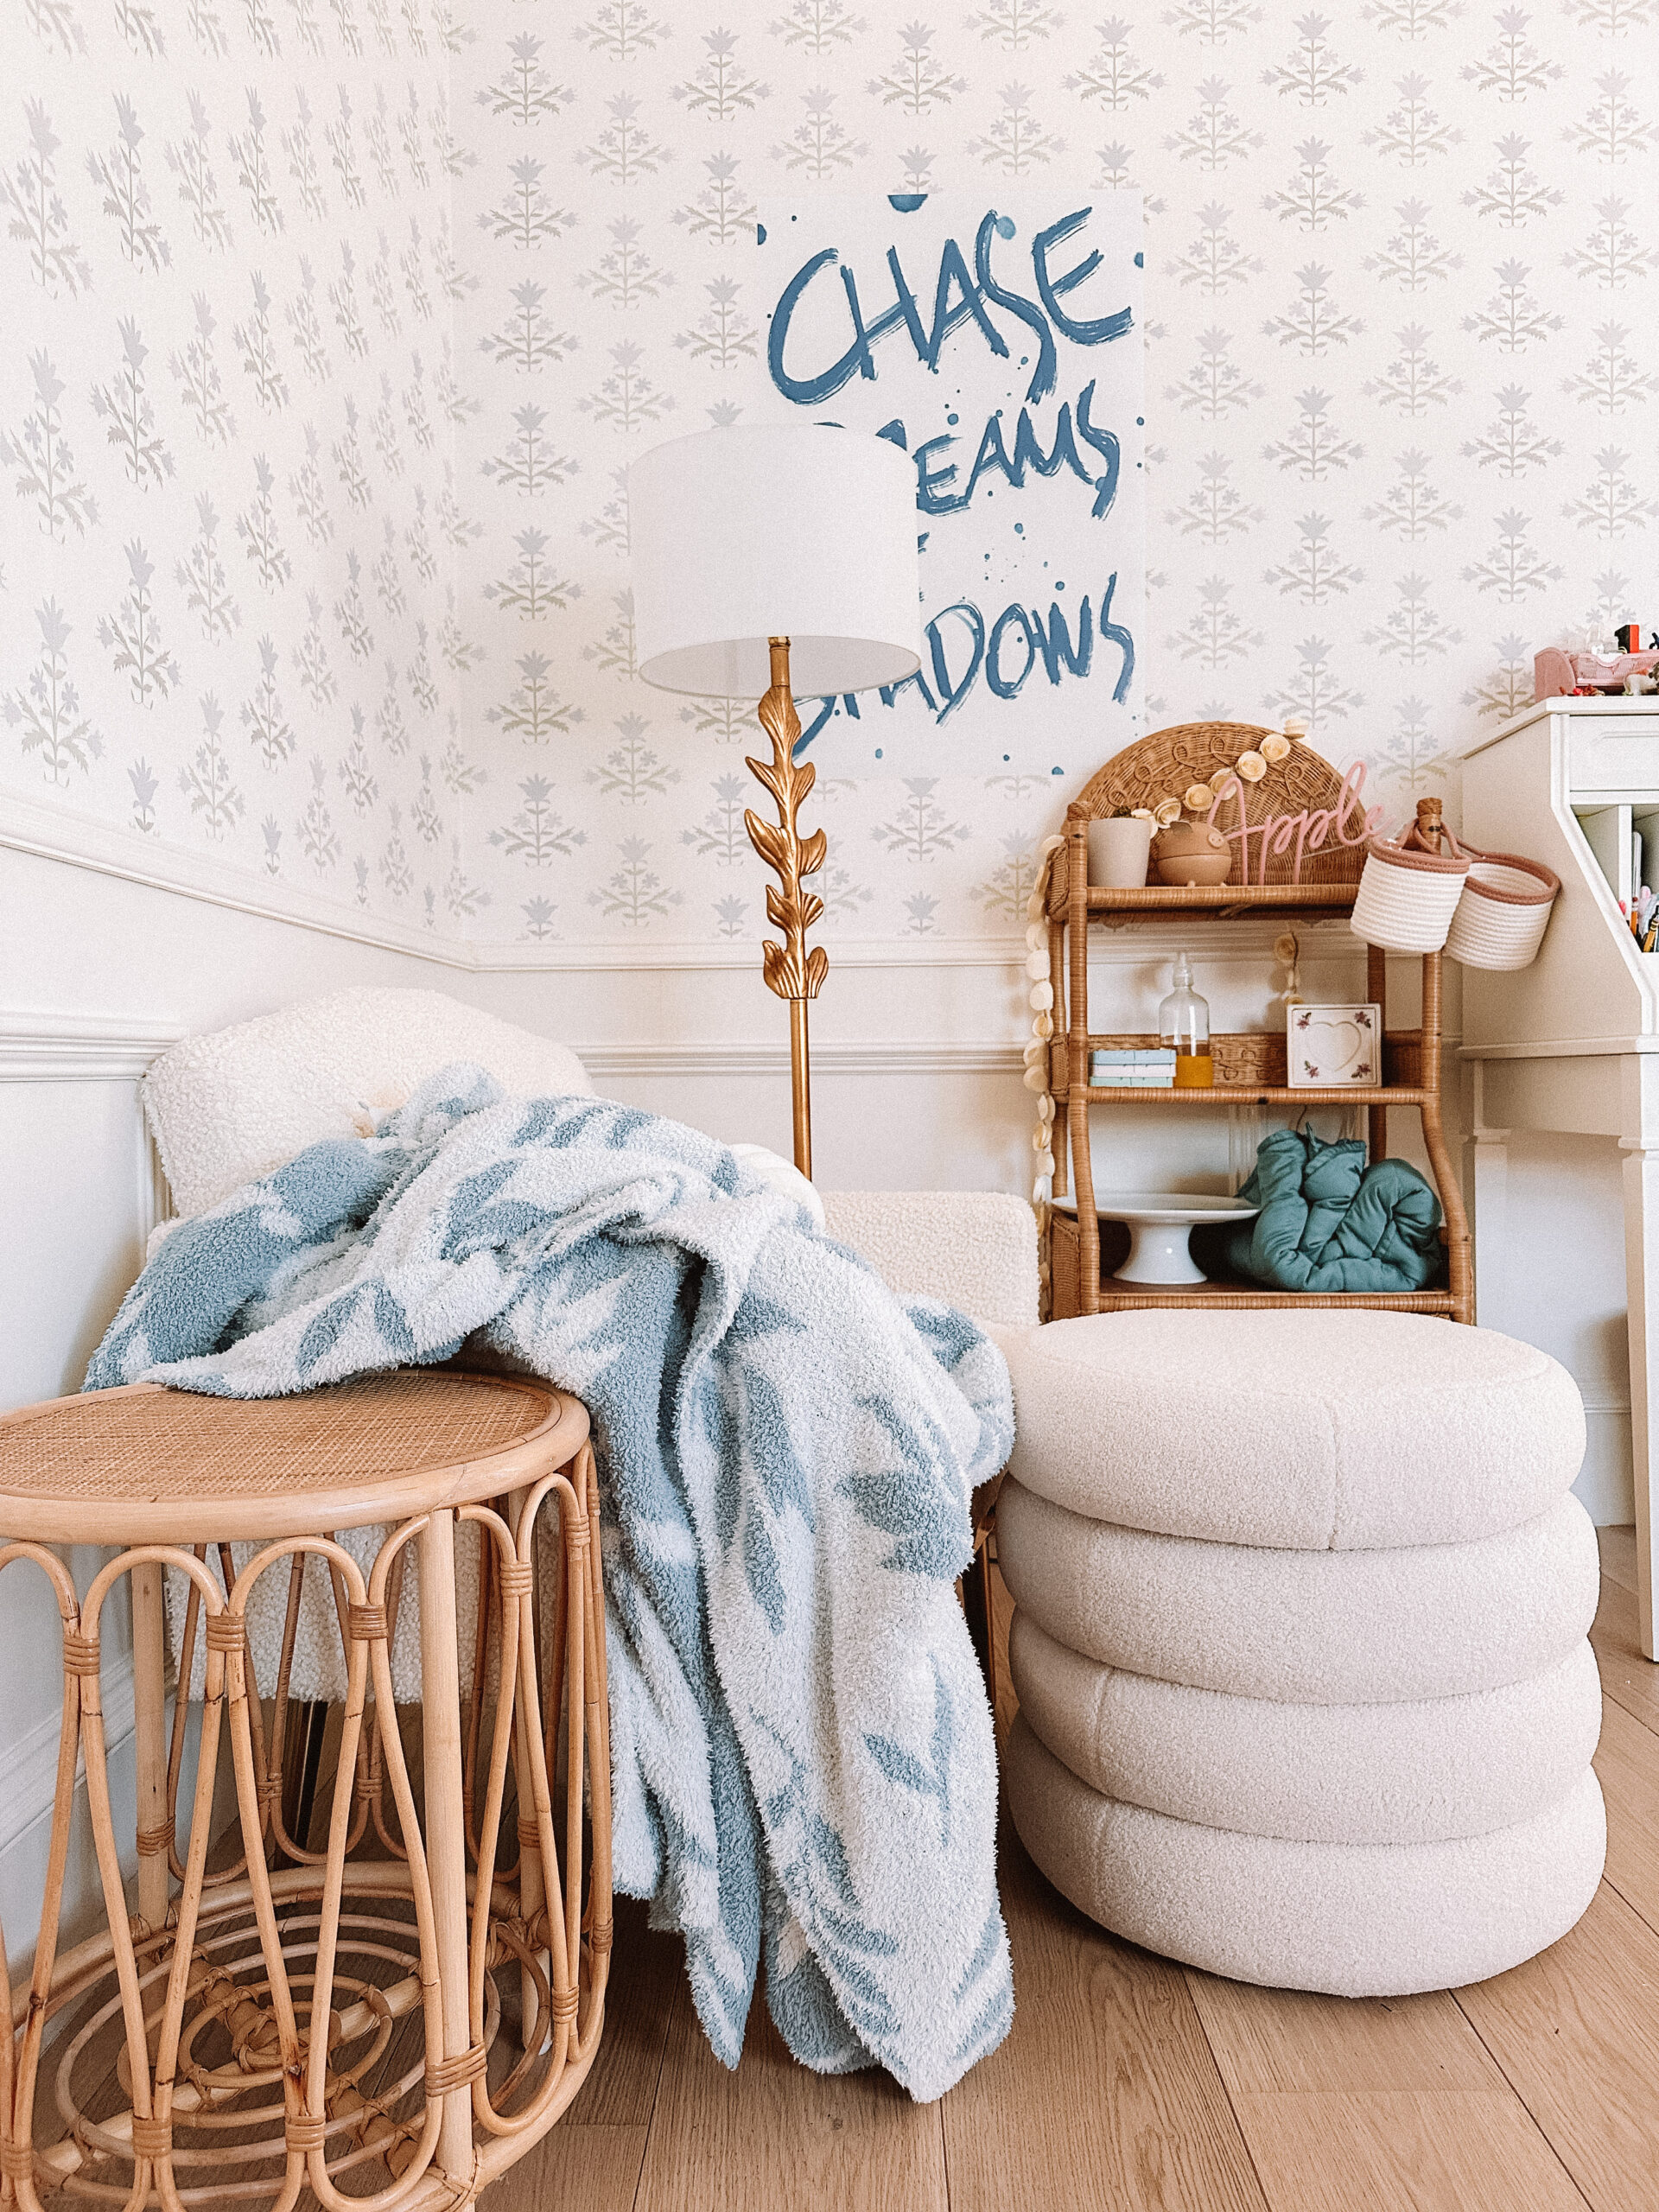 wallpaper ideas for girls bedroom